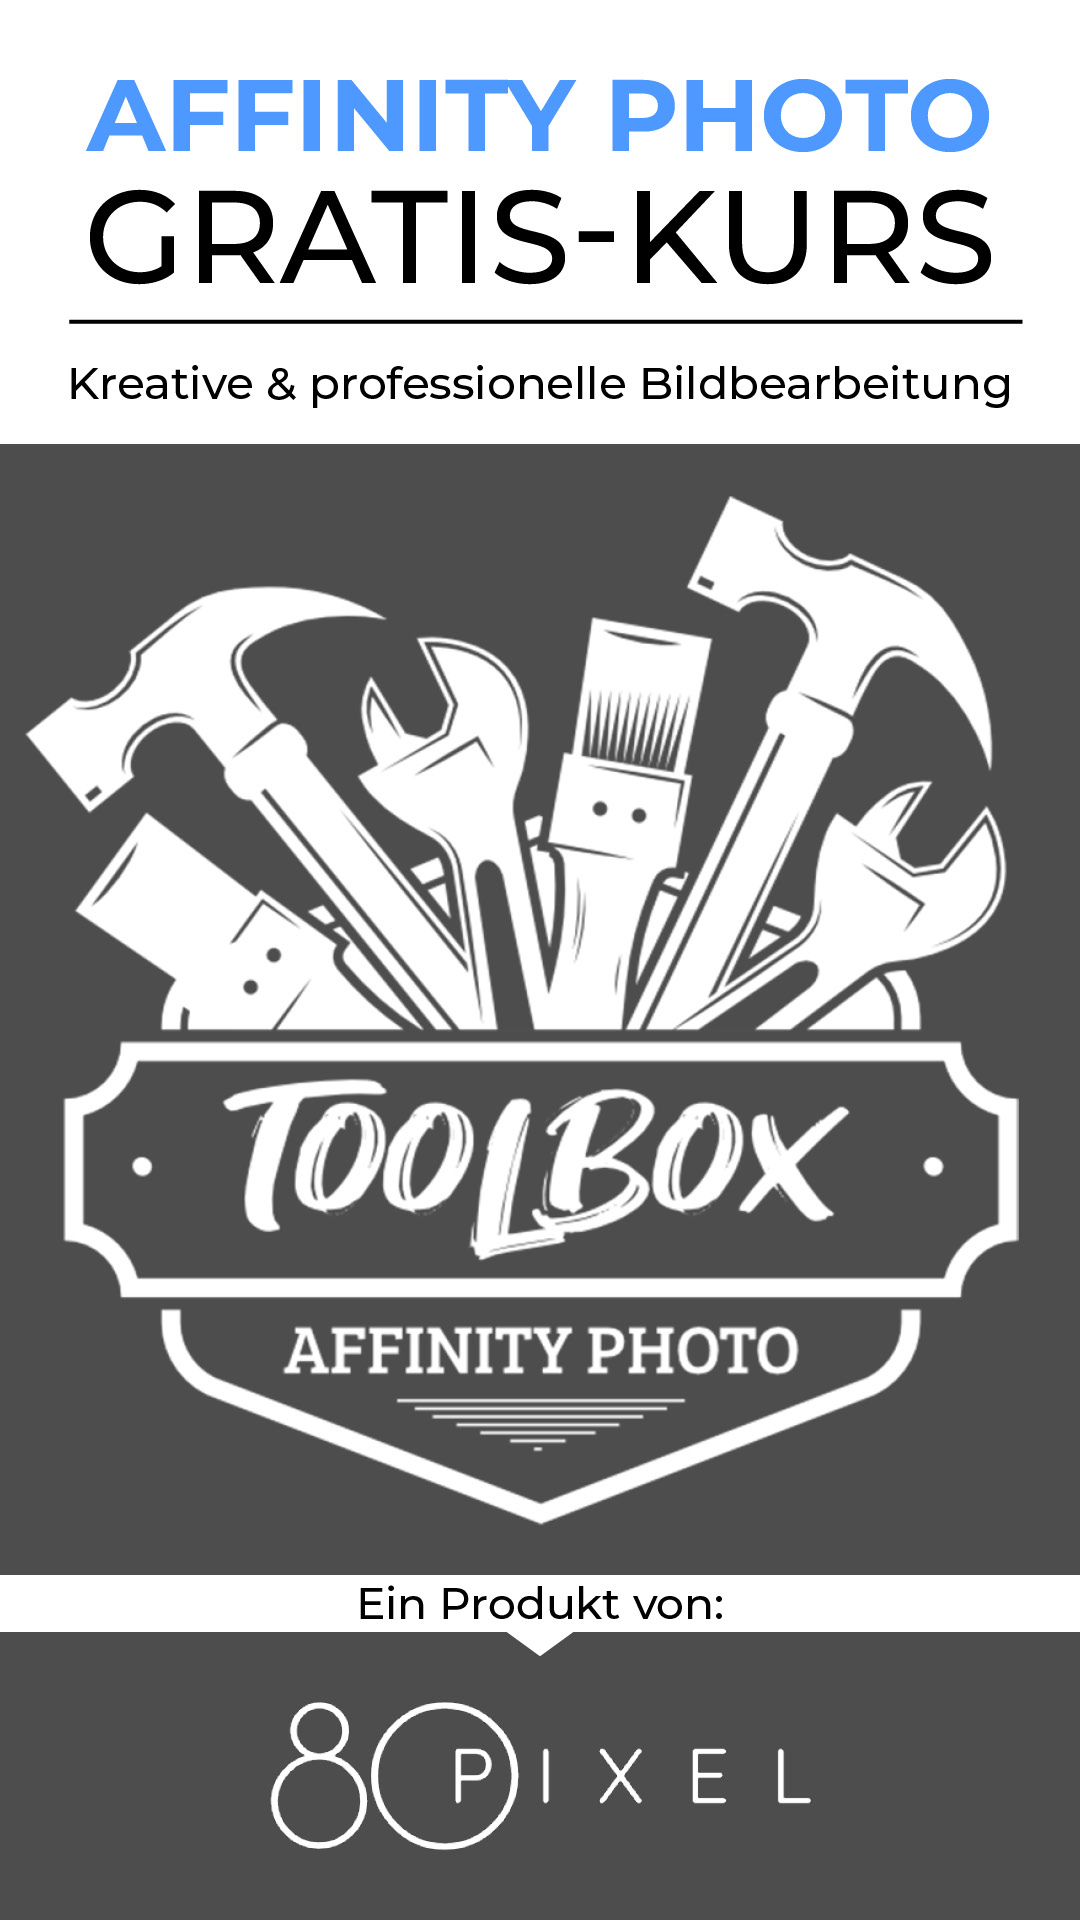 Affinity-Photo-Gratis-Kurs-von-80-Pixel